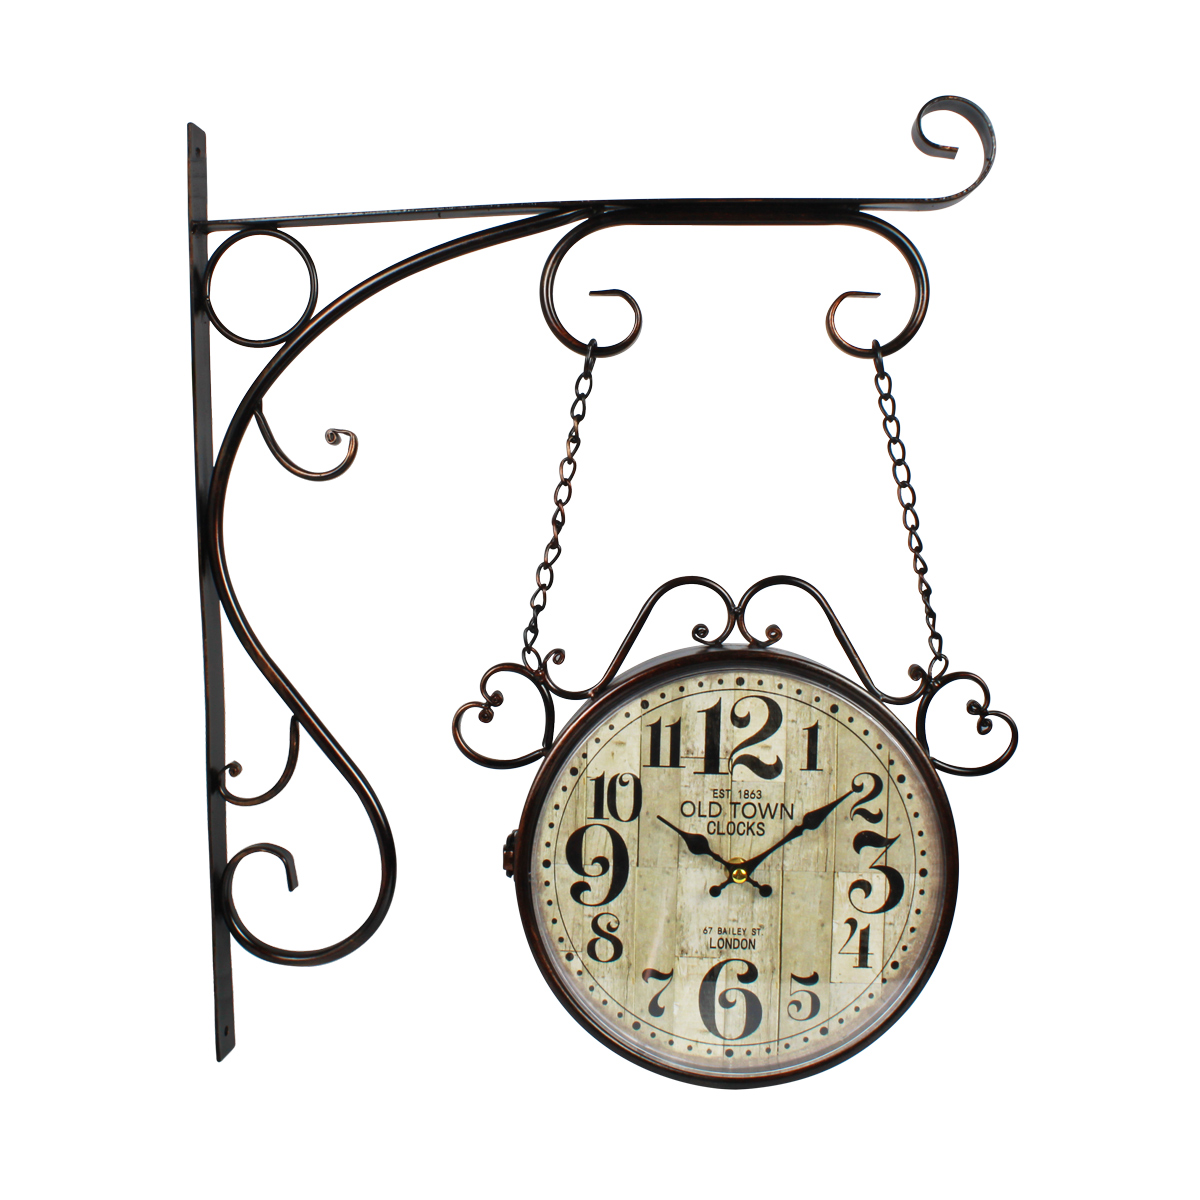 Relogio De Parede Estacao De Trem Old Town Clocks C/ Corrente 1863